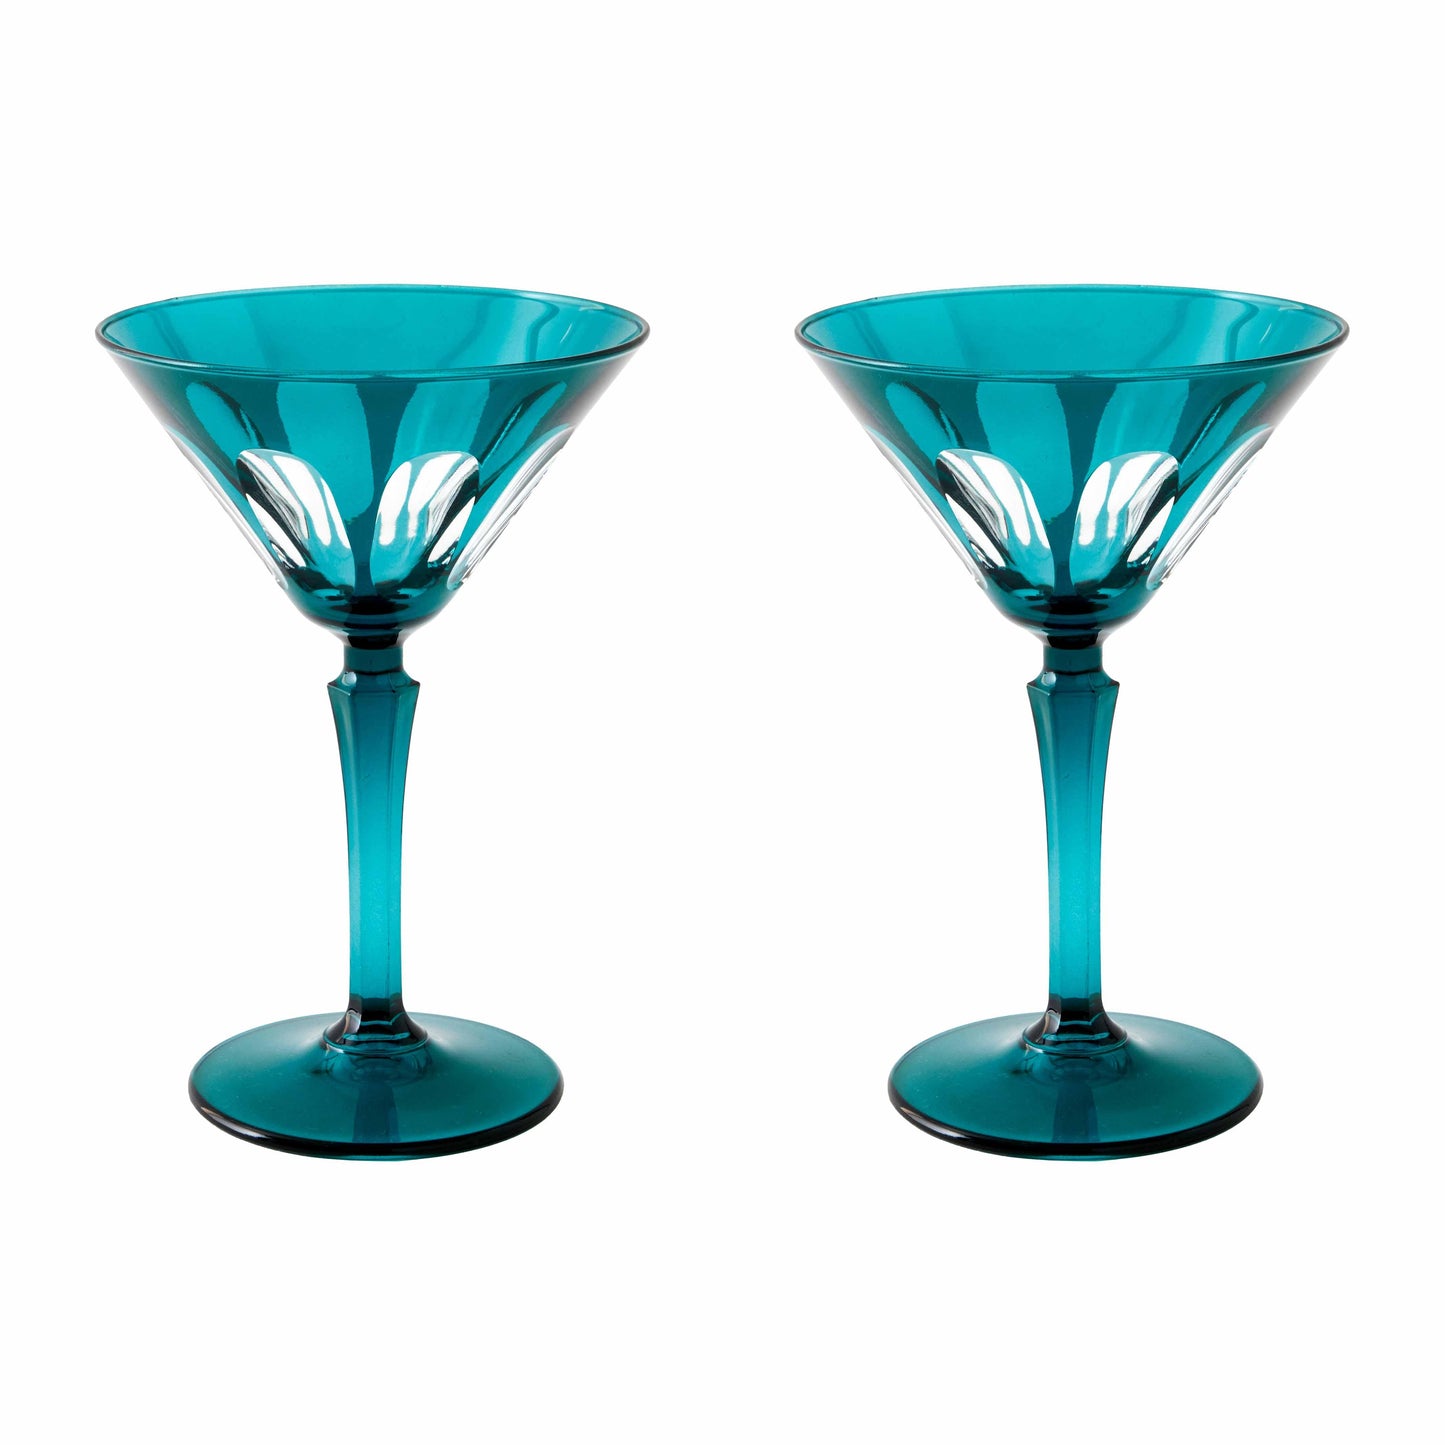 Rialto Martini Glass| Set of 2